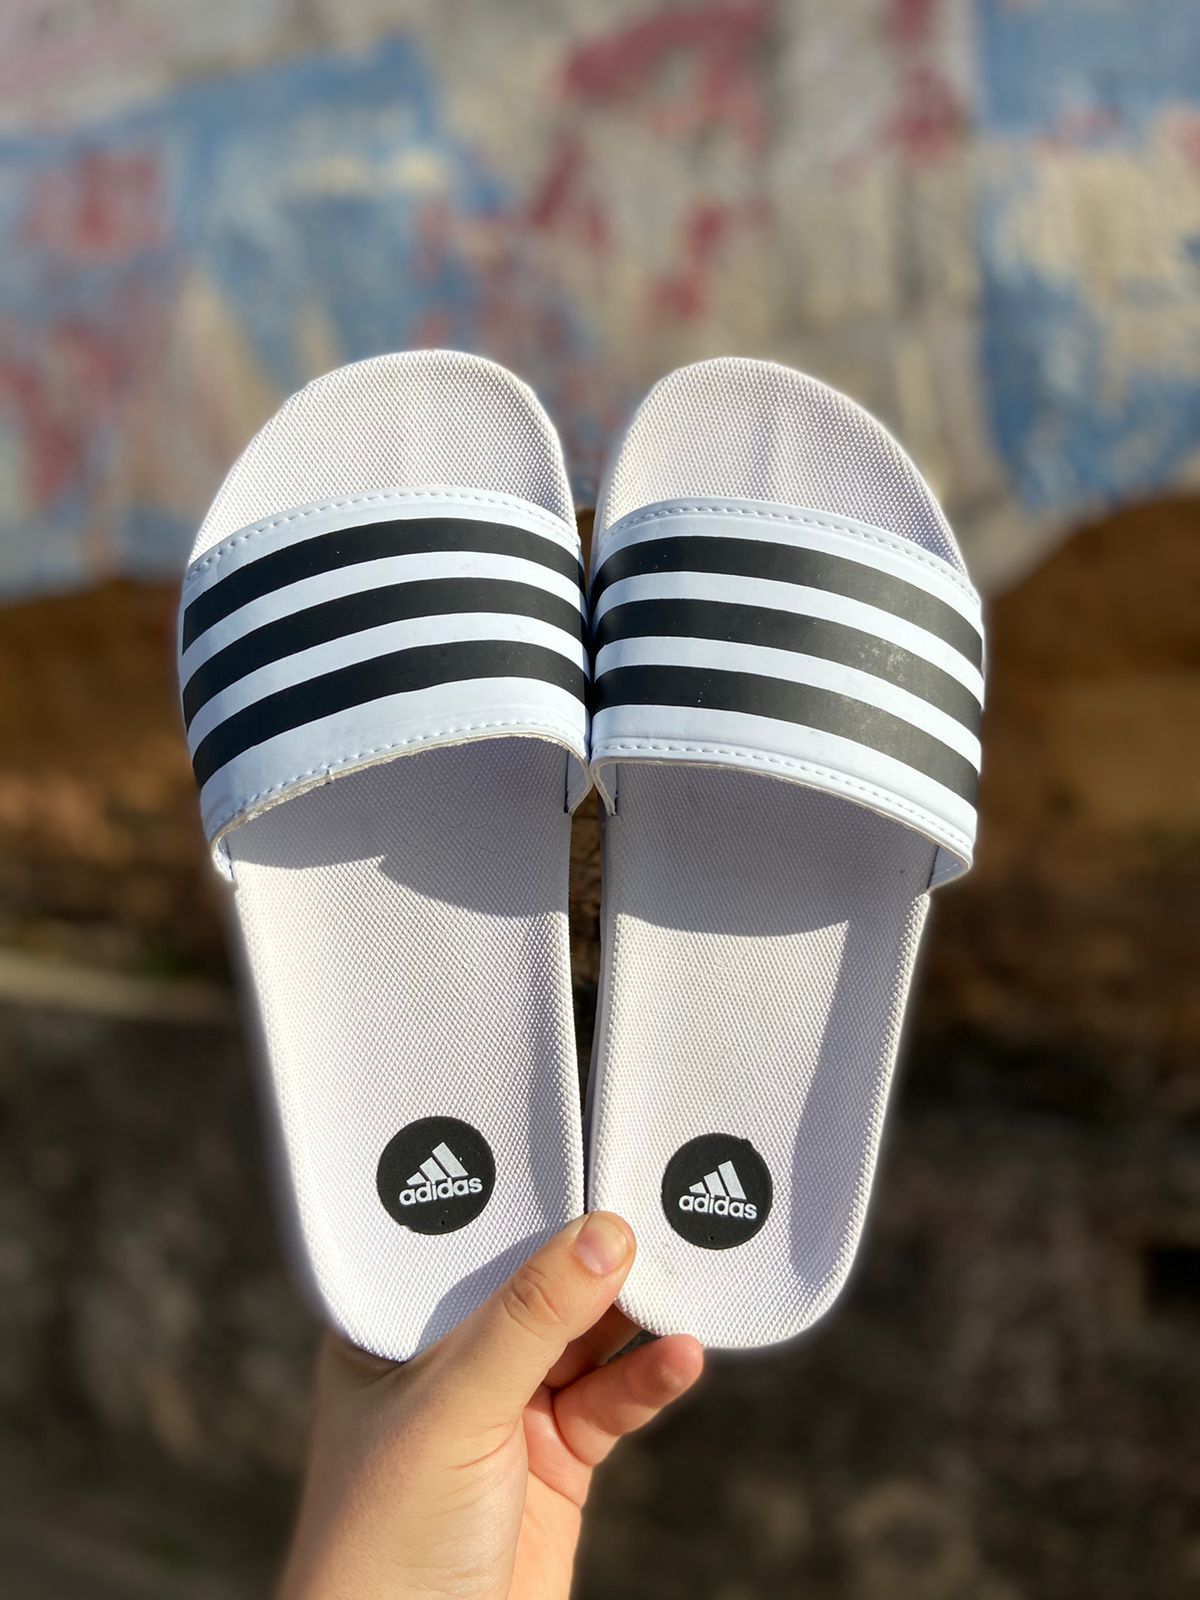 Slide Adidas Masculino Branco/Preto Chinelo Slide - Tribo Shoes